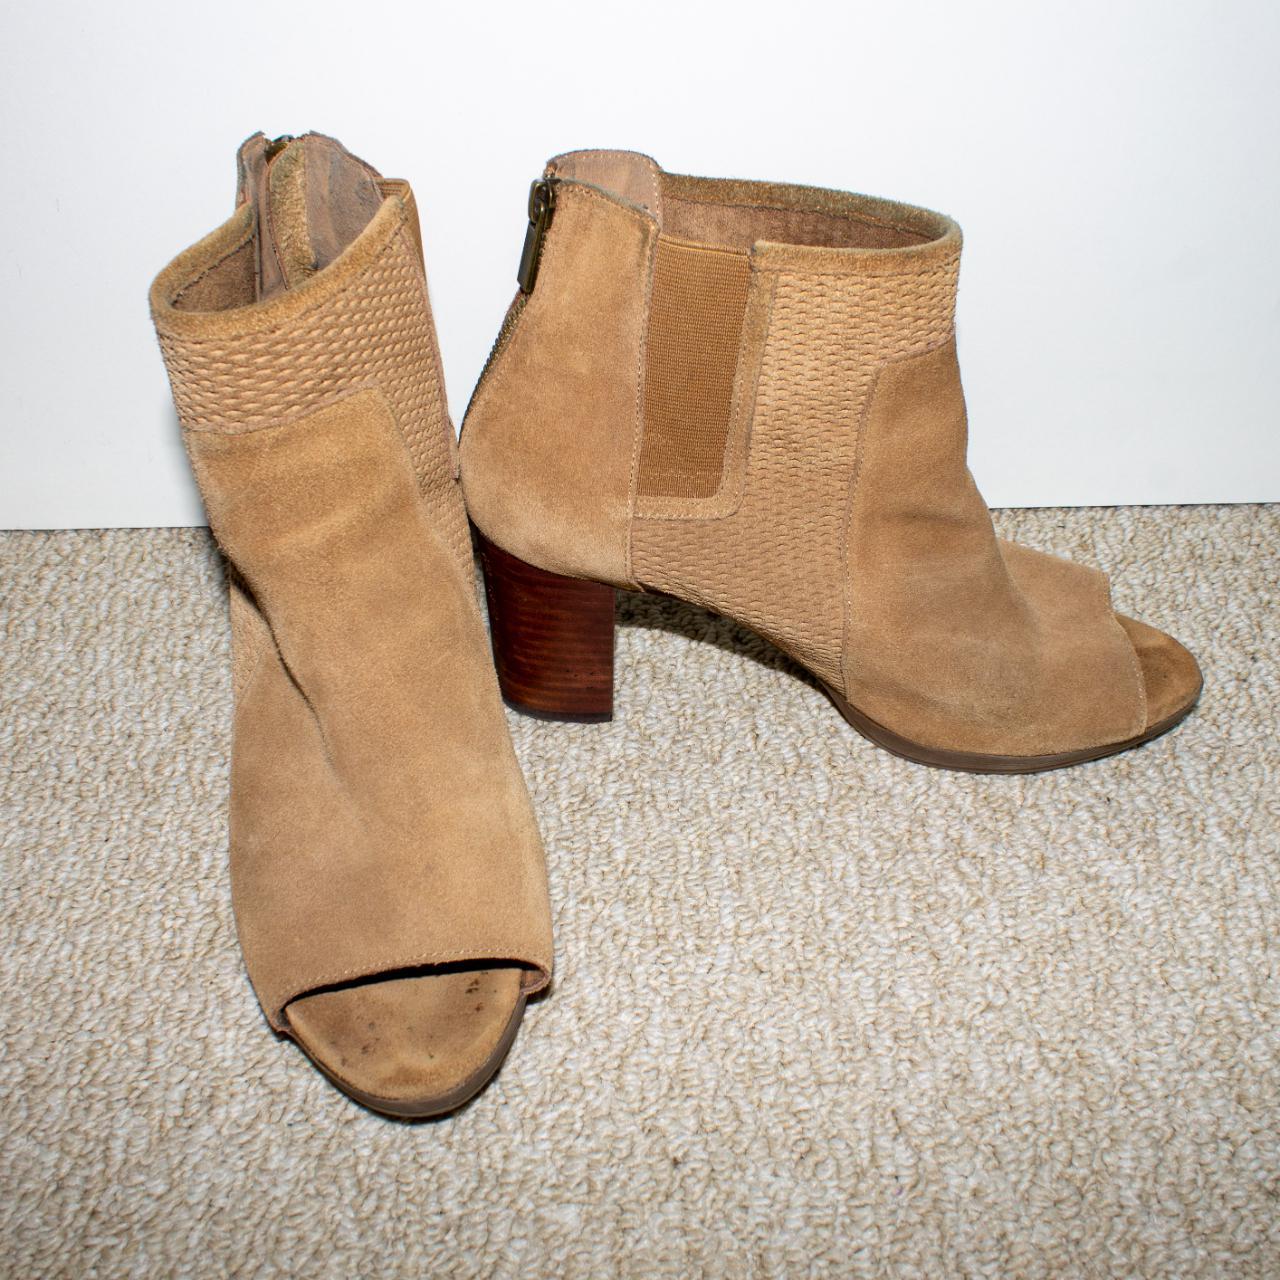 Bella Vita Women's Brown and Tan Boots